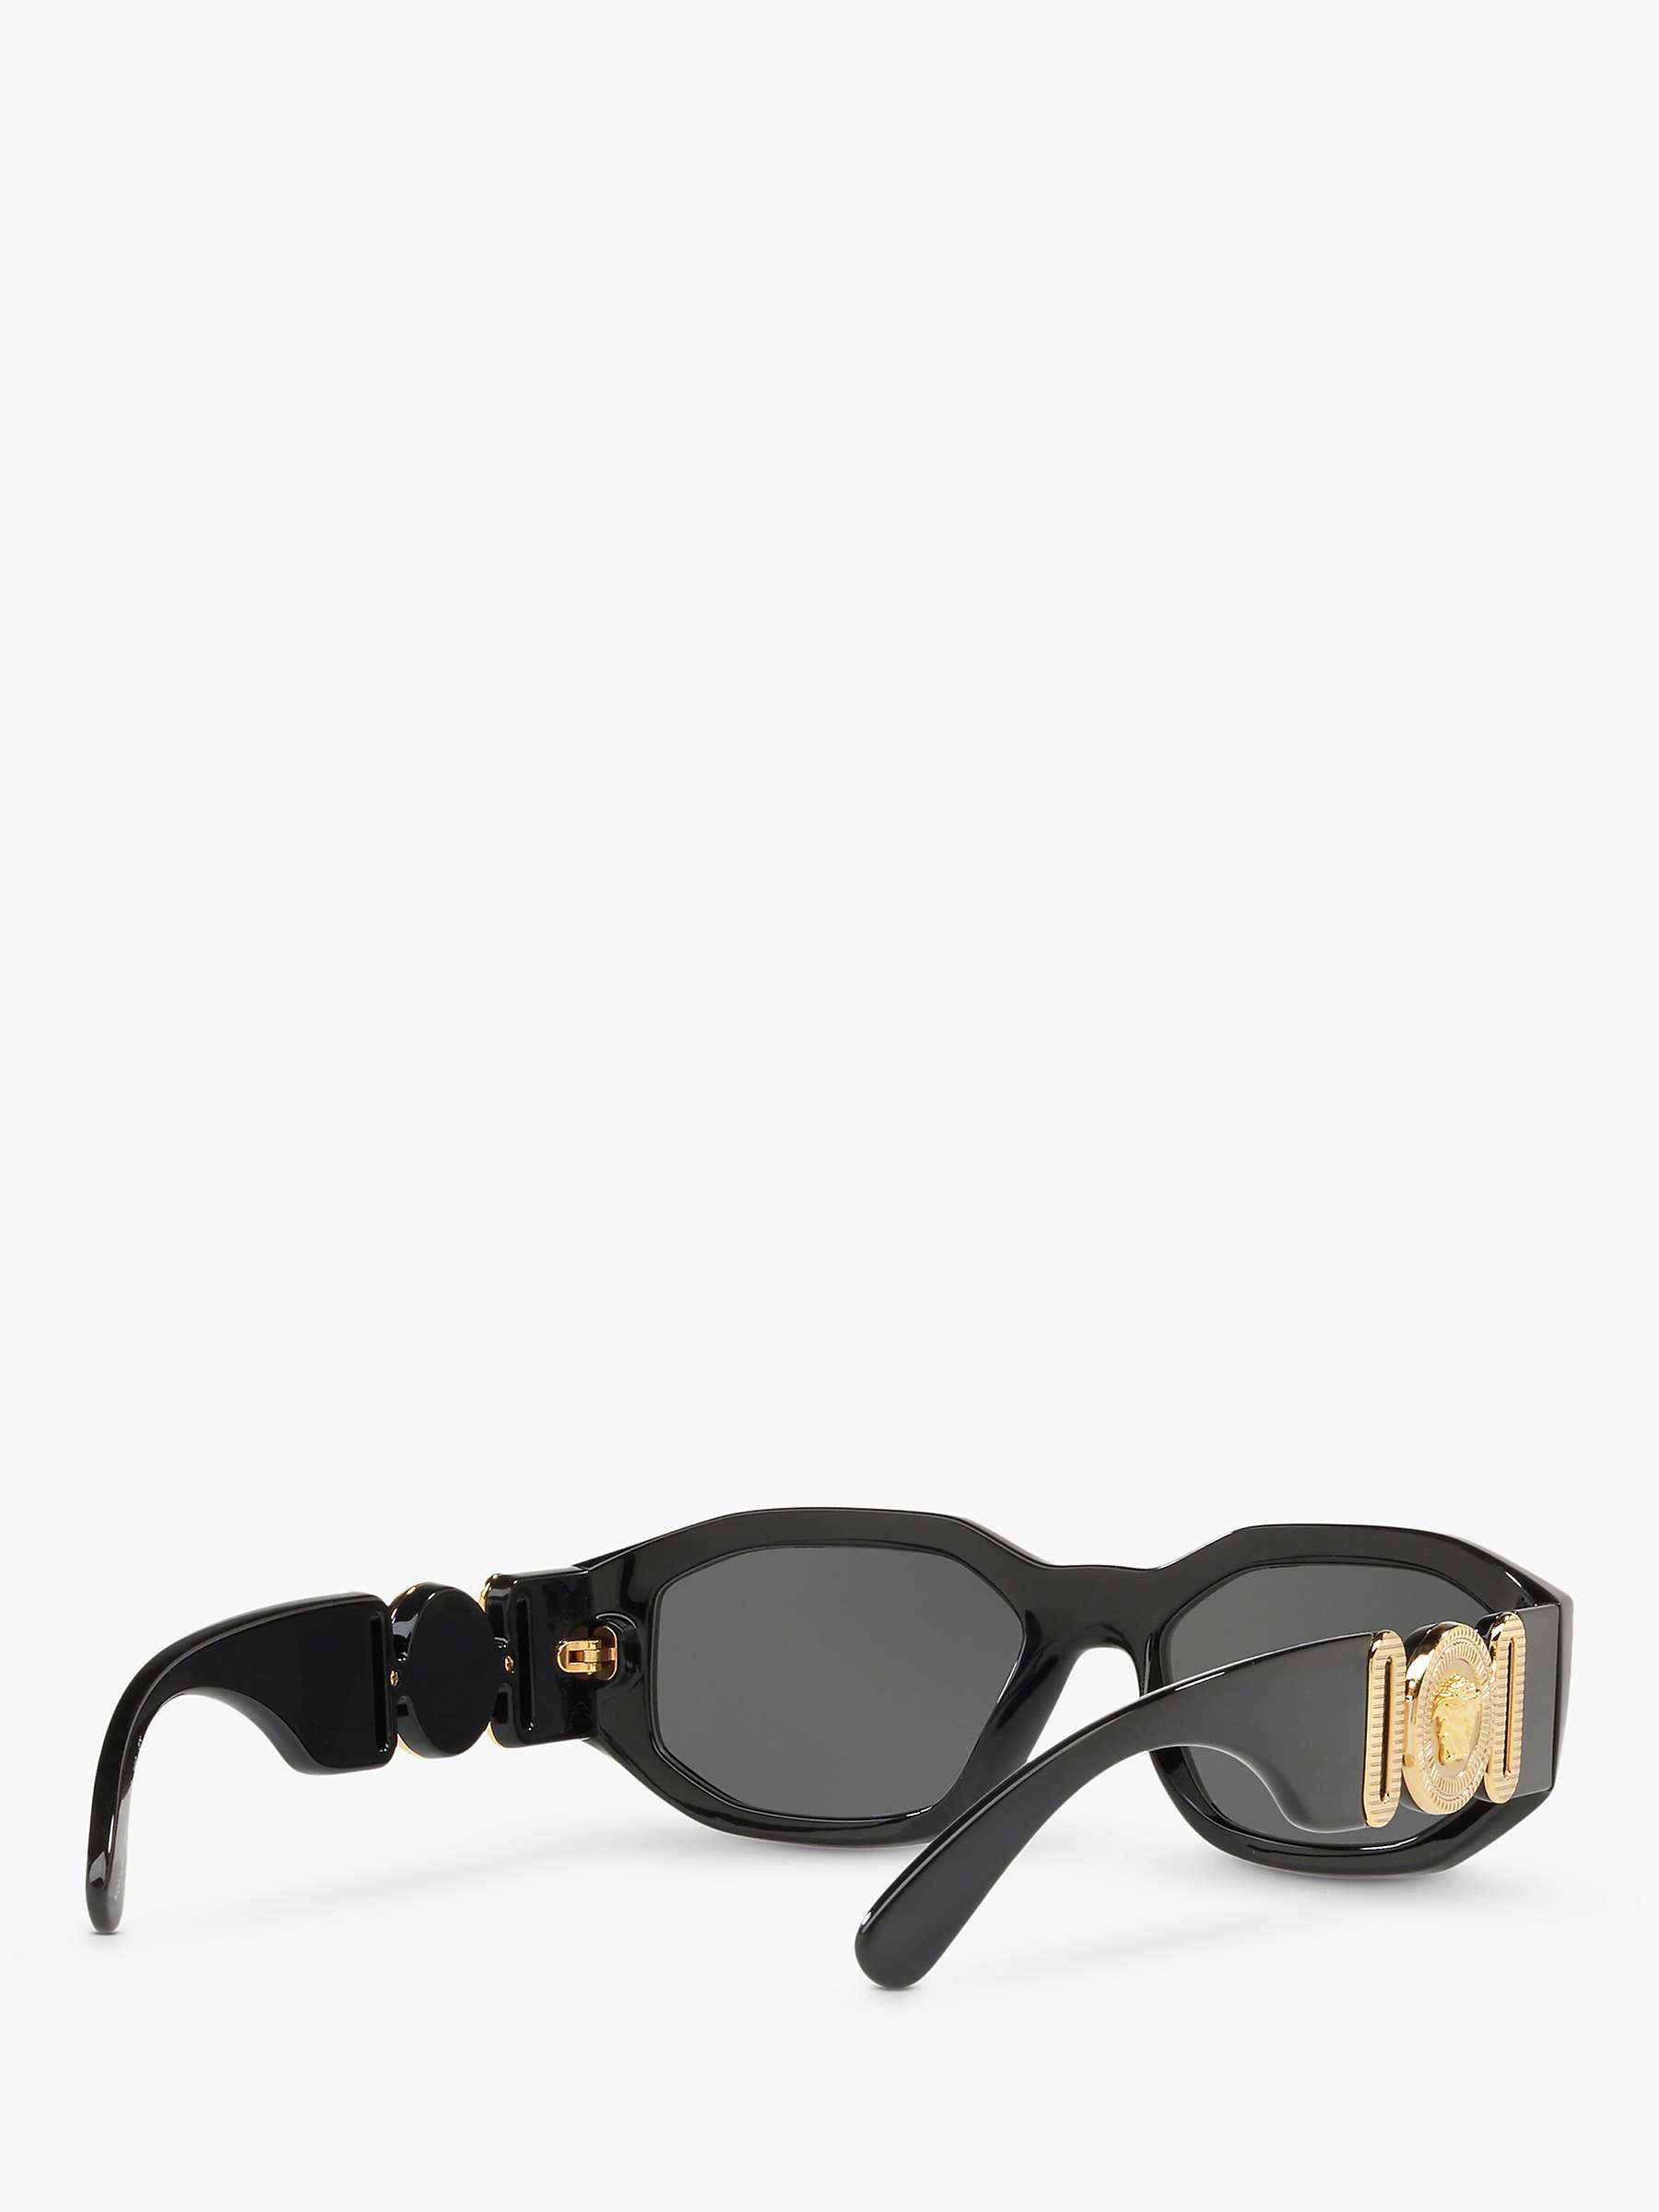 Buy Versace VE4361 Women's Square Sunglasses, Black/Grey Online at johnlewis.com